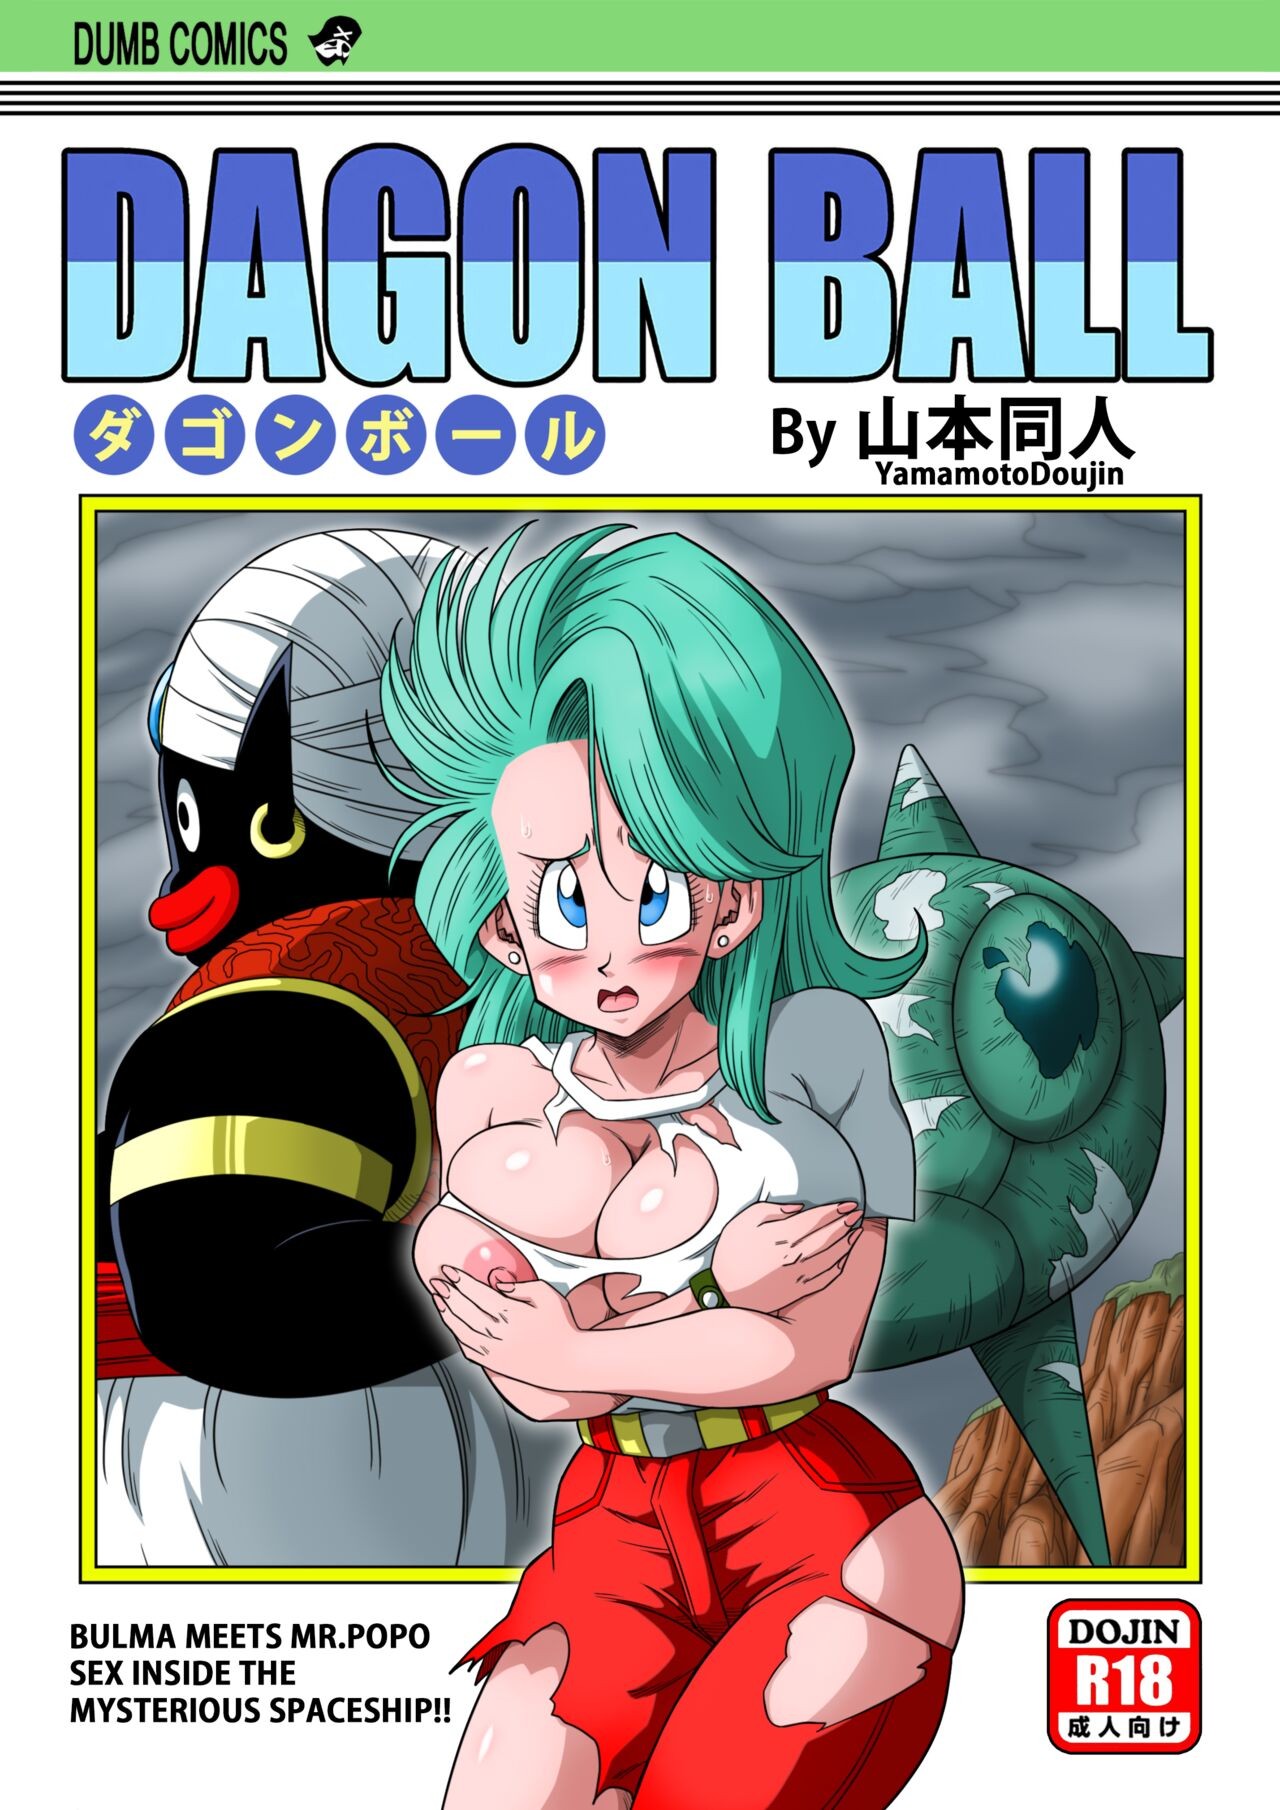 Dagon Ball Yamamotodoujin 01